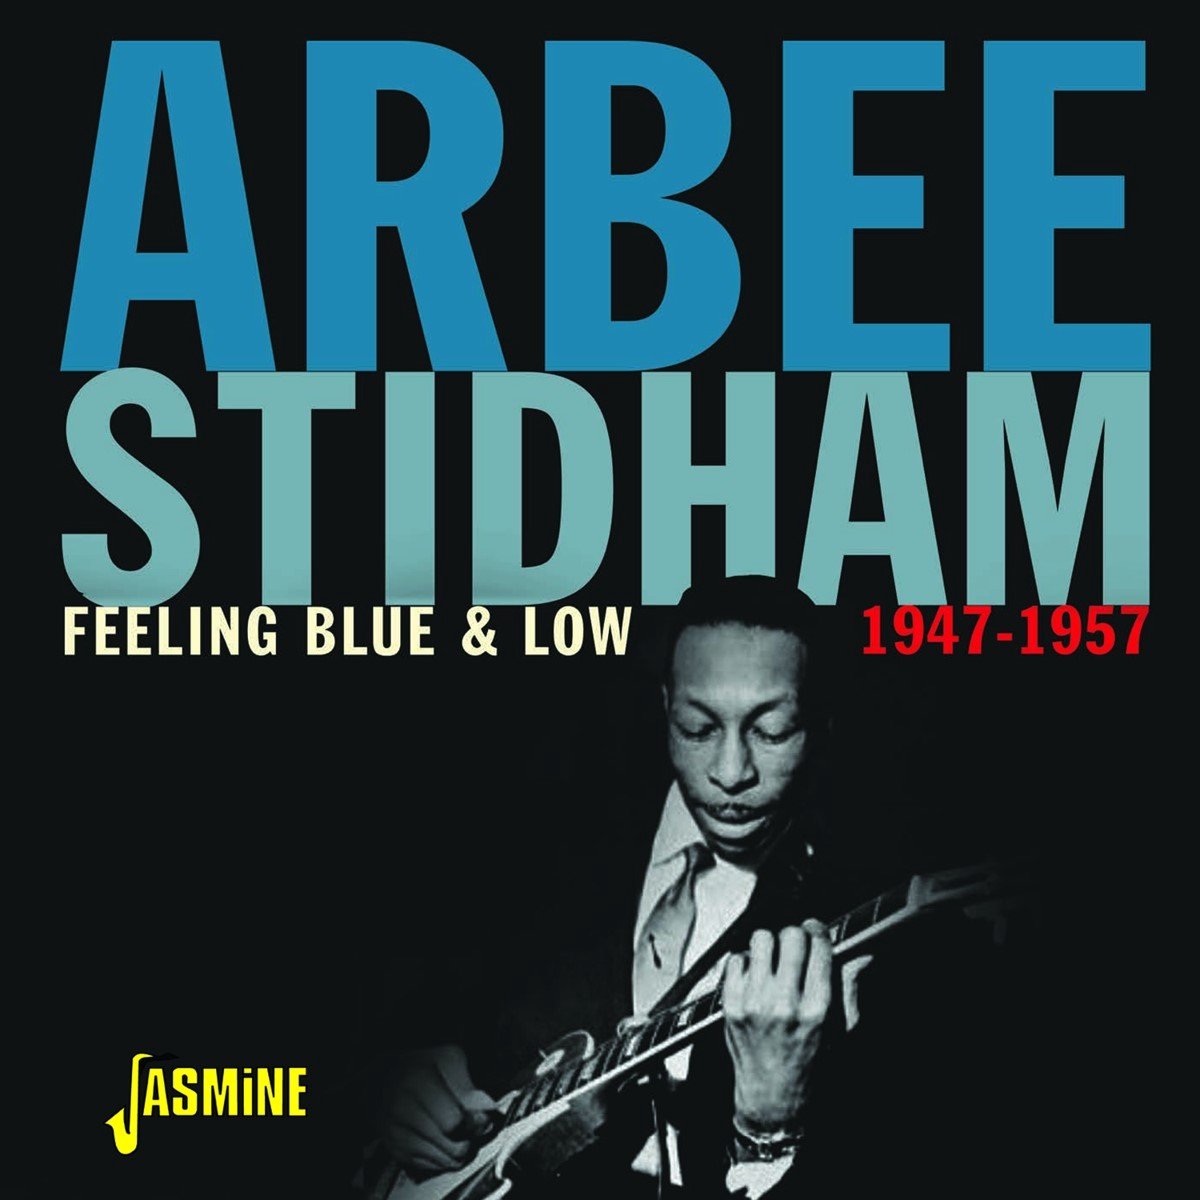 Arbee Stidham - Feeling Blue & Low 1947-1957